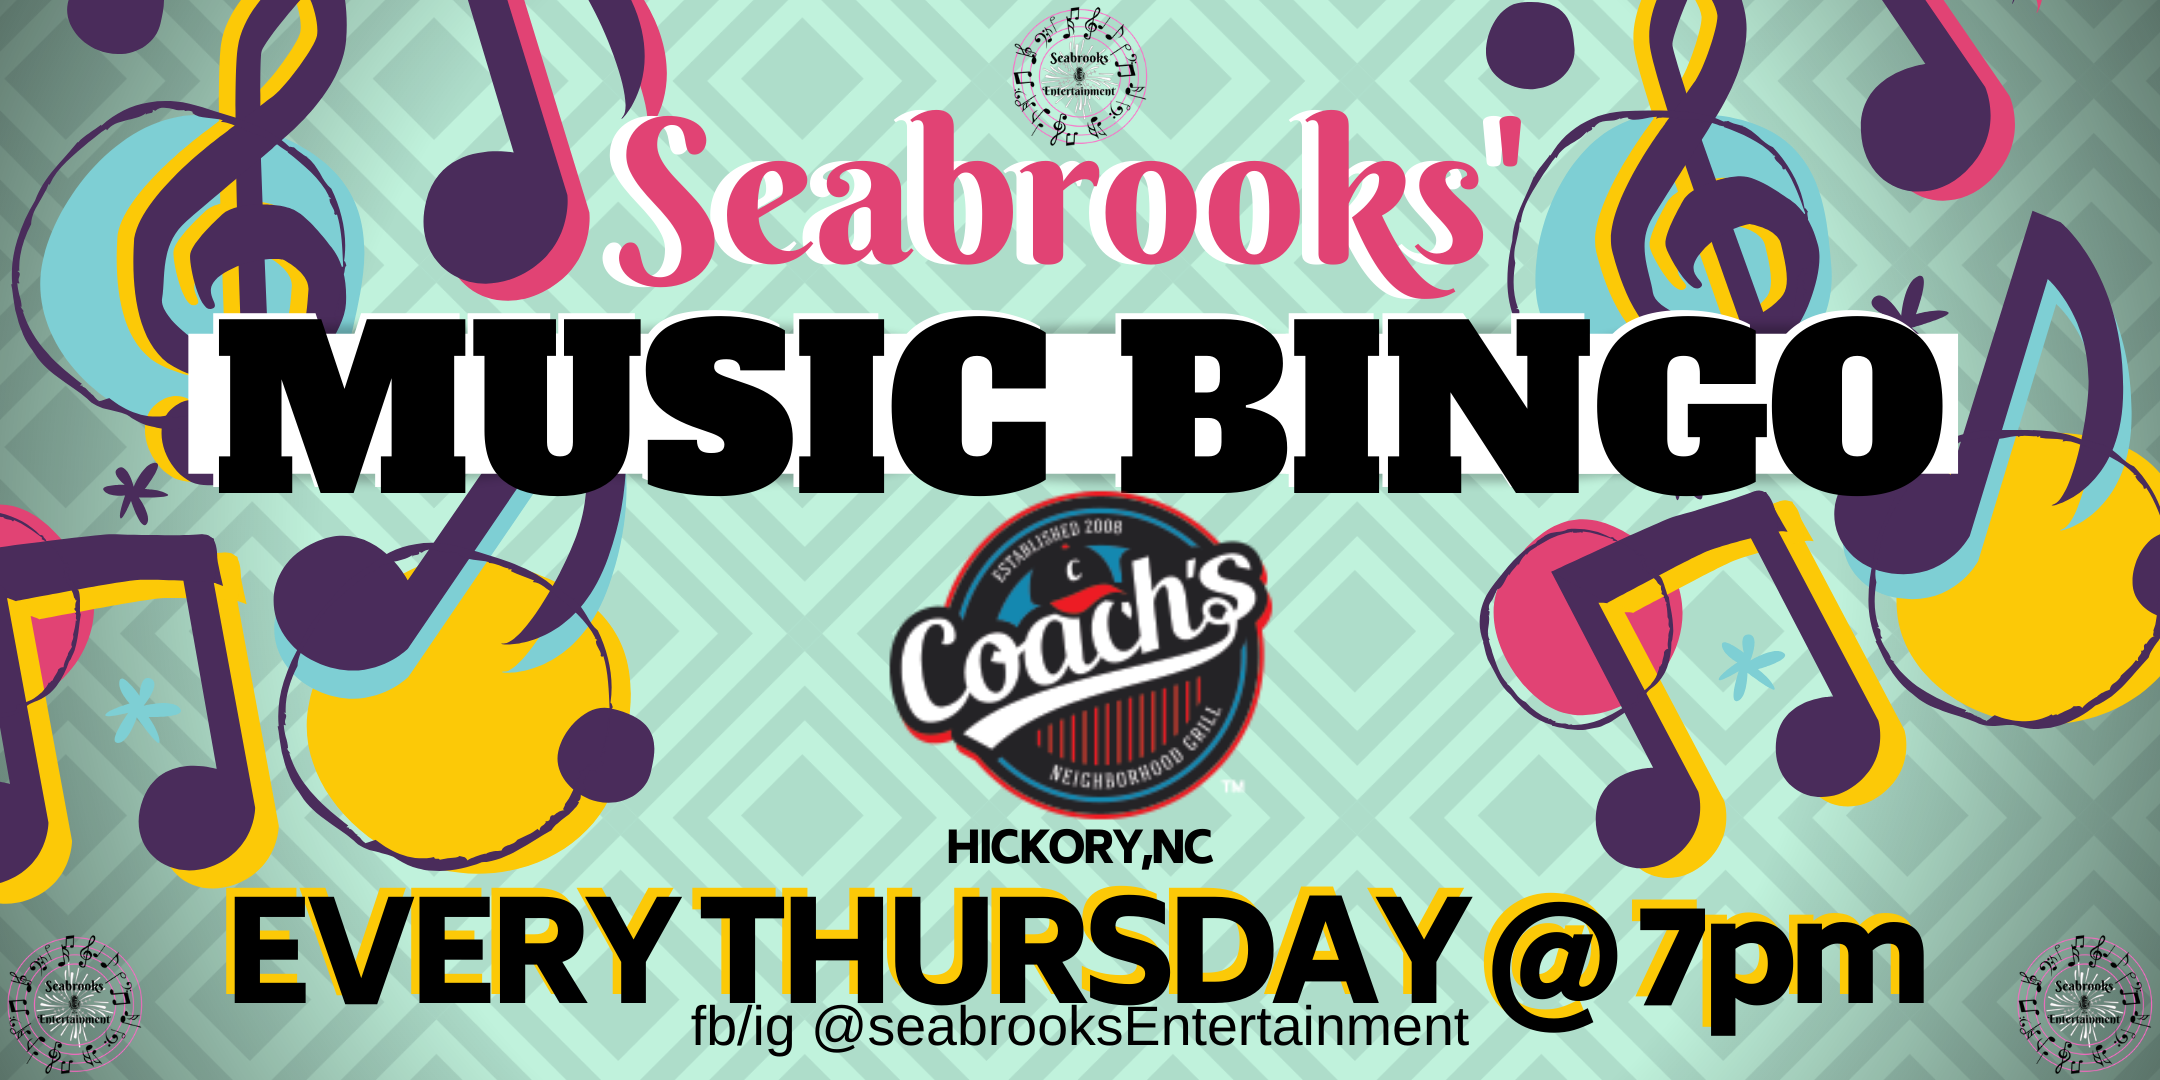 SEABROOKS’ MUSIC BINGO THURSDAYS,7PM@COACH’S HICKORY,NC.FREE,FUN,GREAT MUSIC!